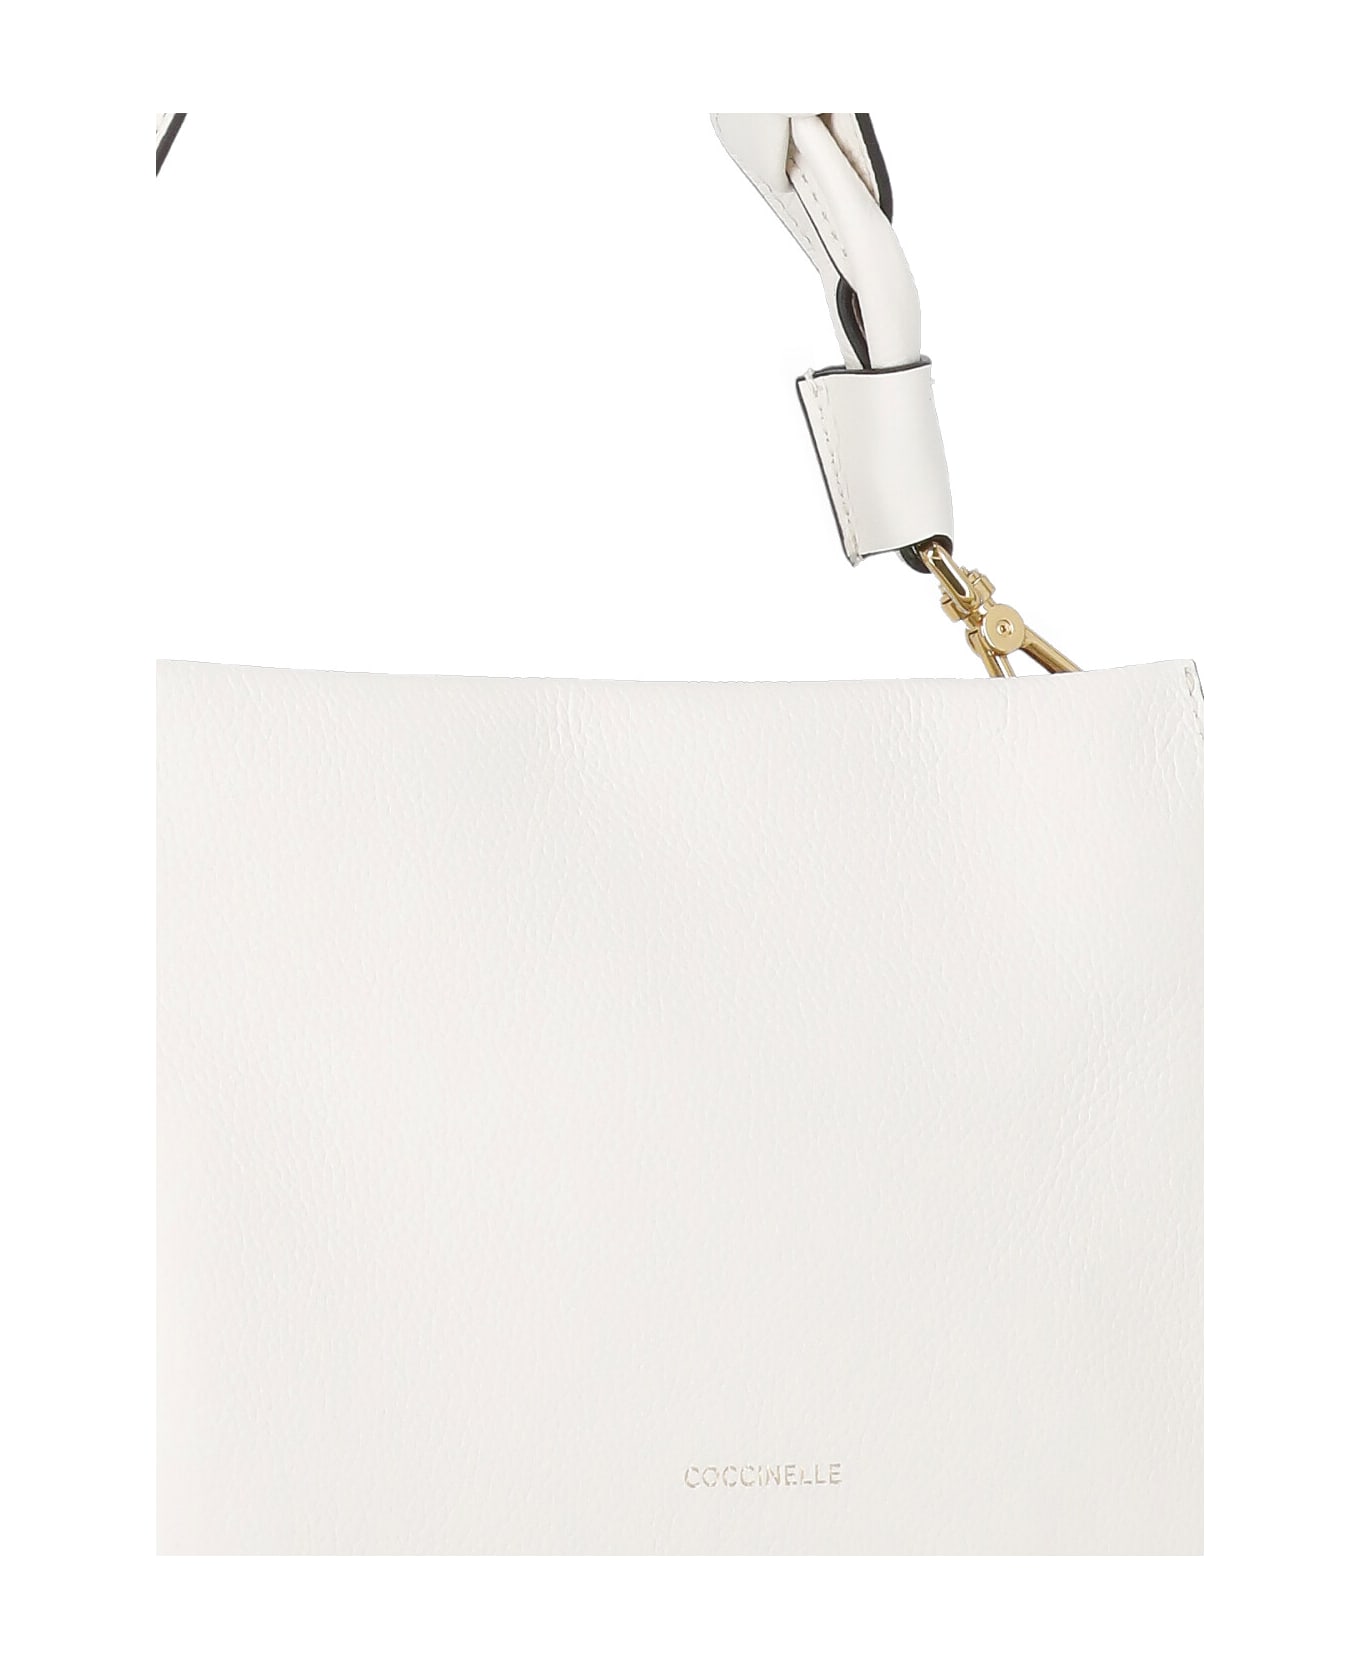 Coccinelle Boheme Shoulder Bag - White